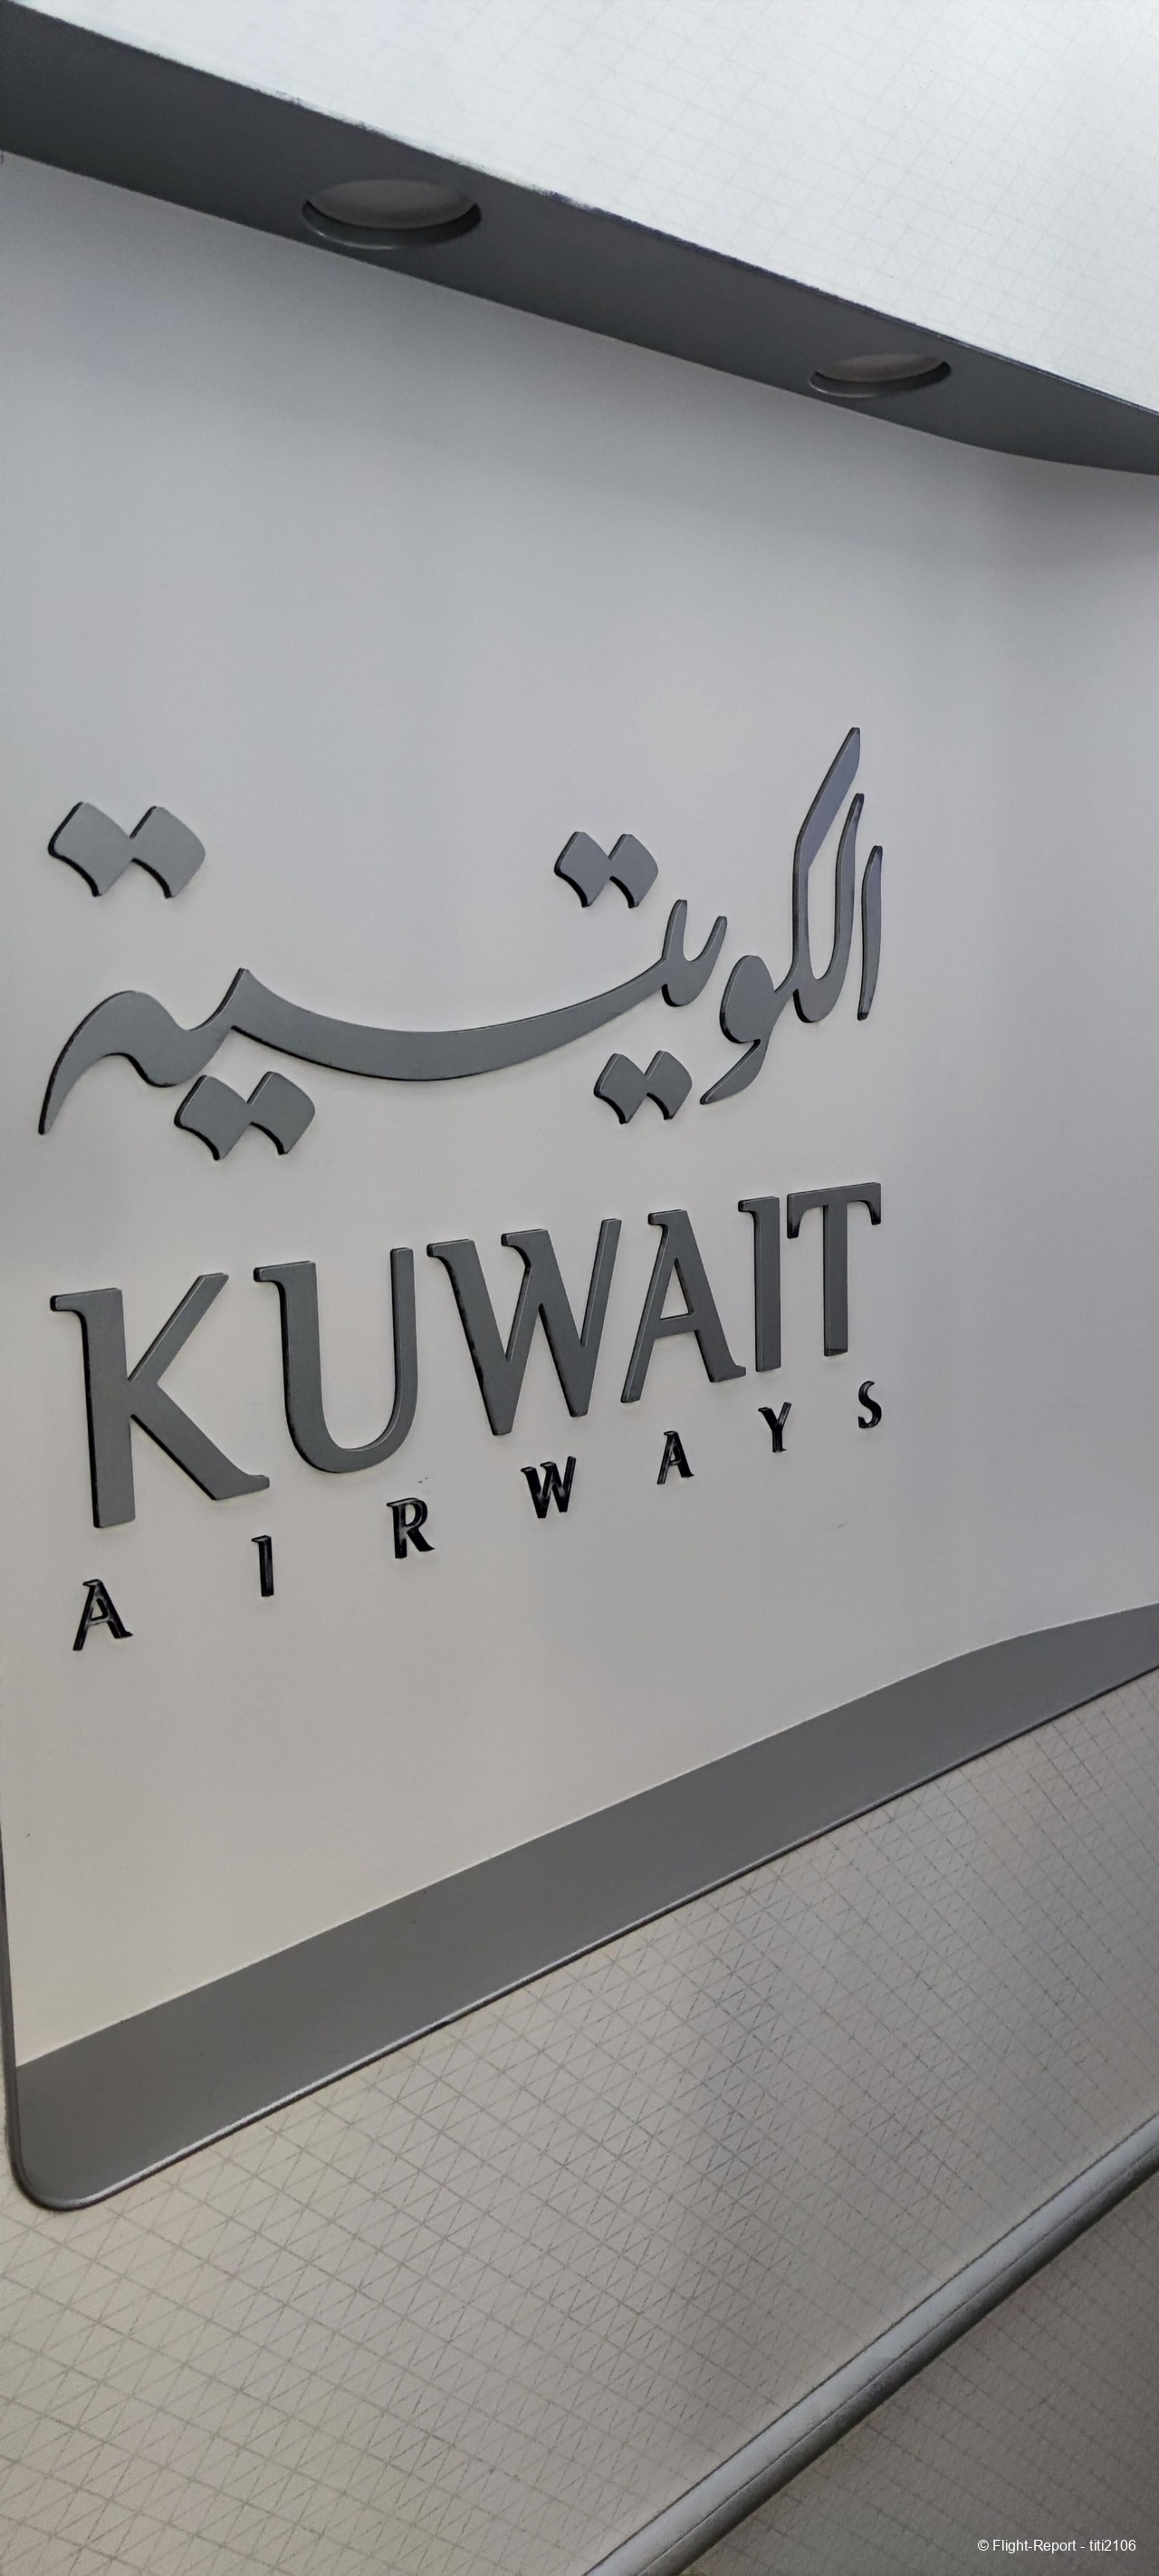 photo 001-cdg-kwi-kuwait-airways-39